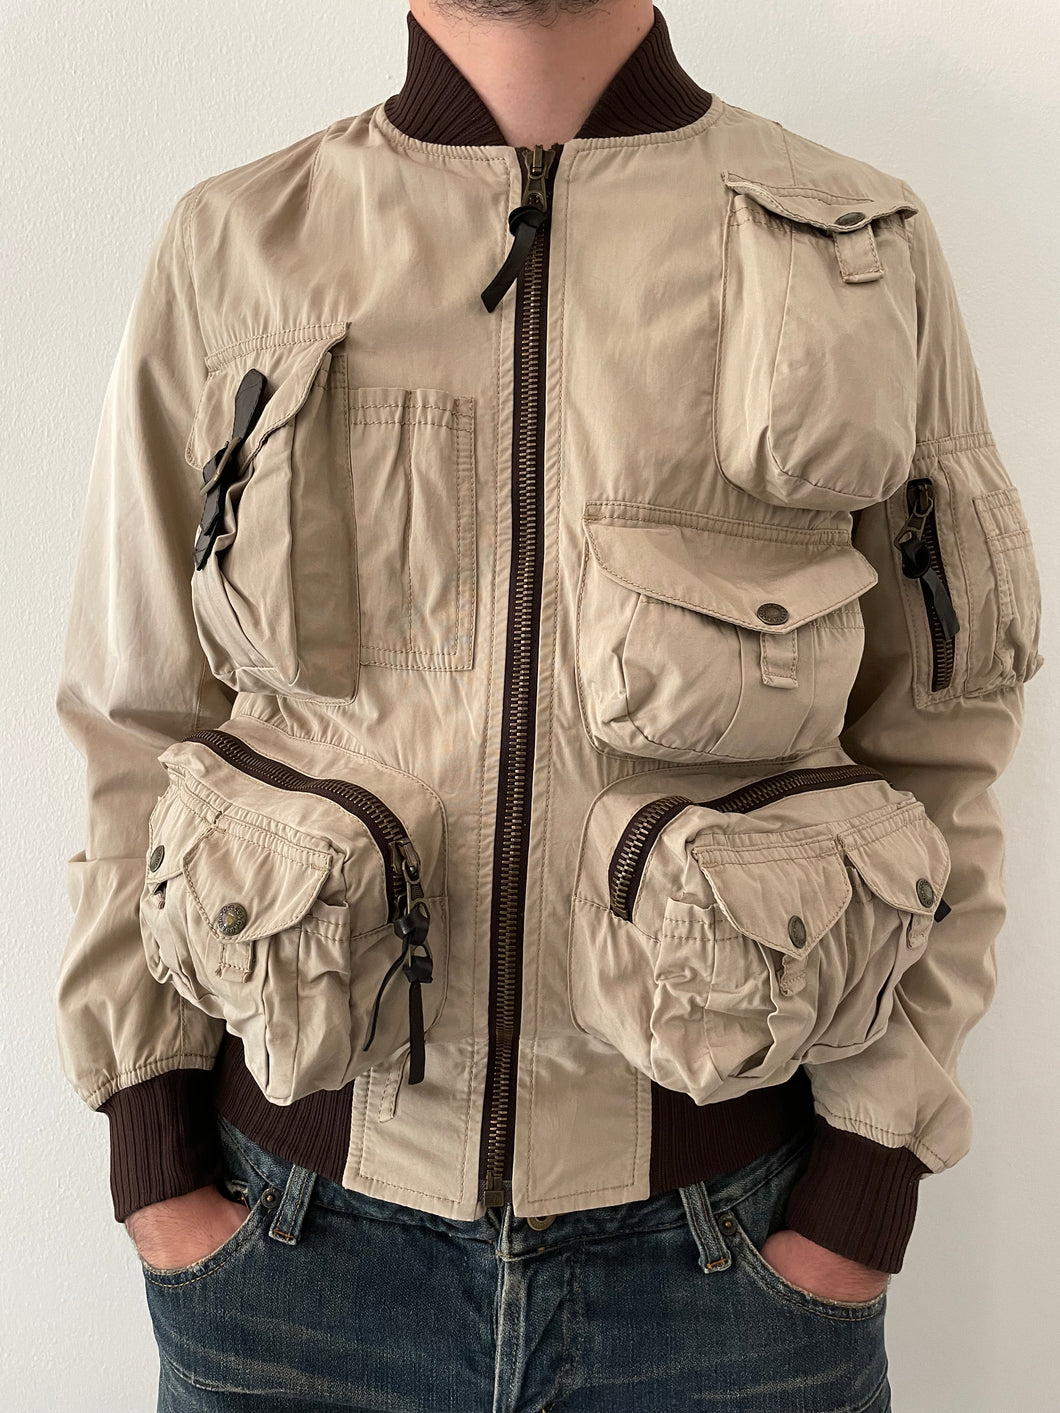 SS2003 Dolce & Gabbana parachute cargo bomber jacket